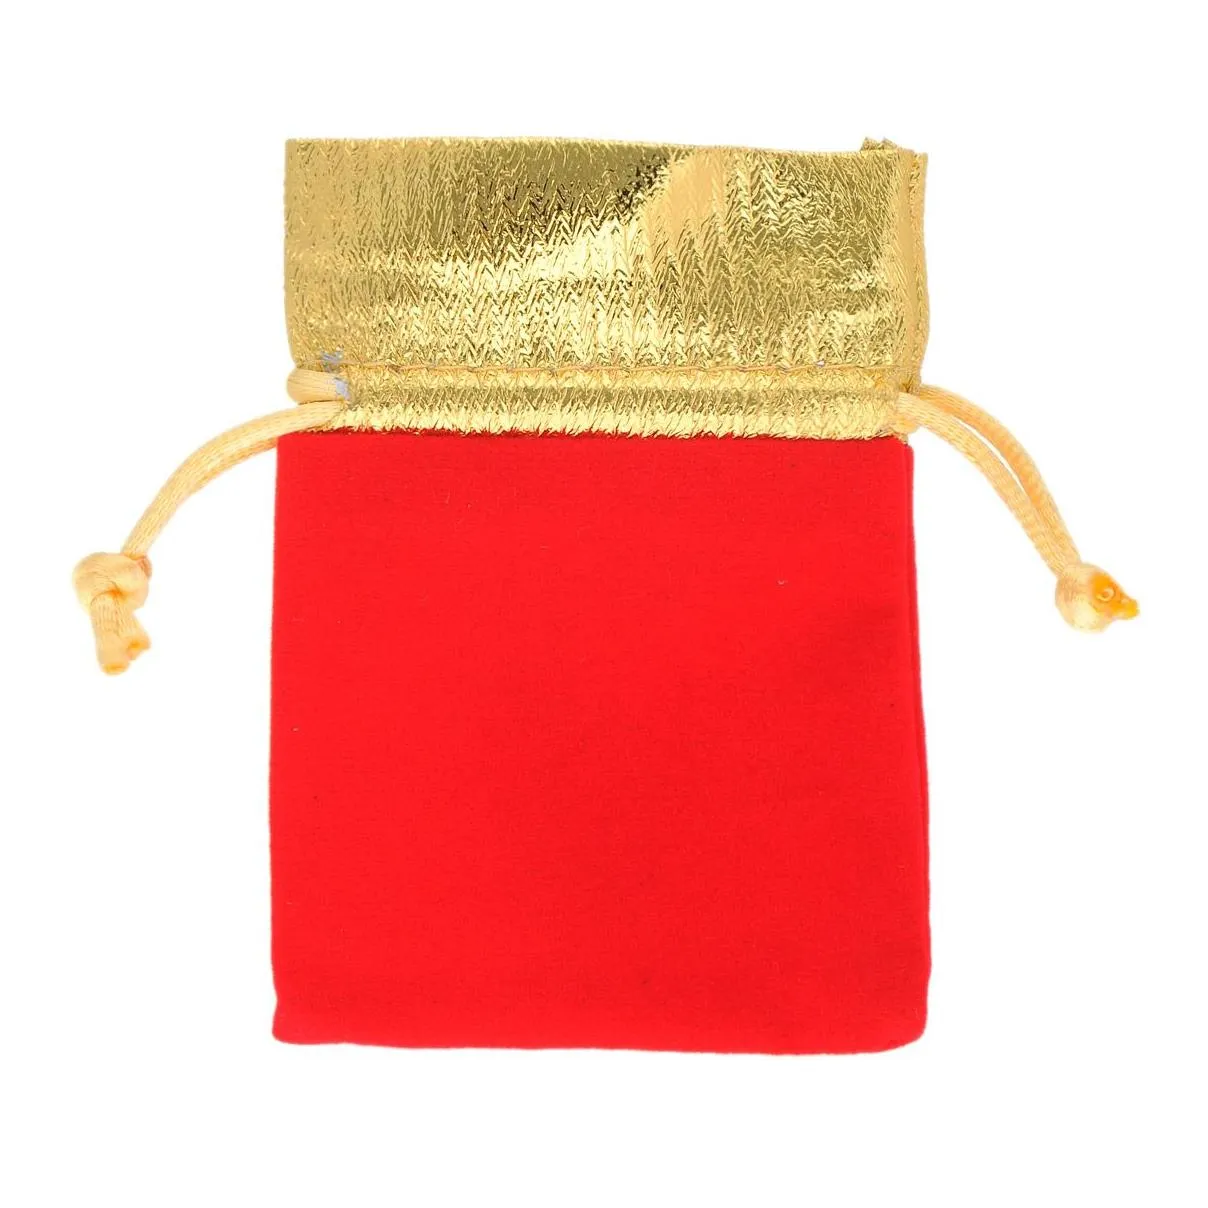 50PCs Velvet Gold Color Trim Drawstring Jewelry Gift Bags Pouches Wedding Party Decoration Favor Drawable Bag